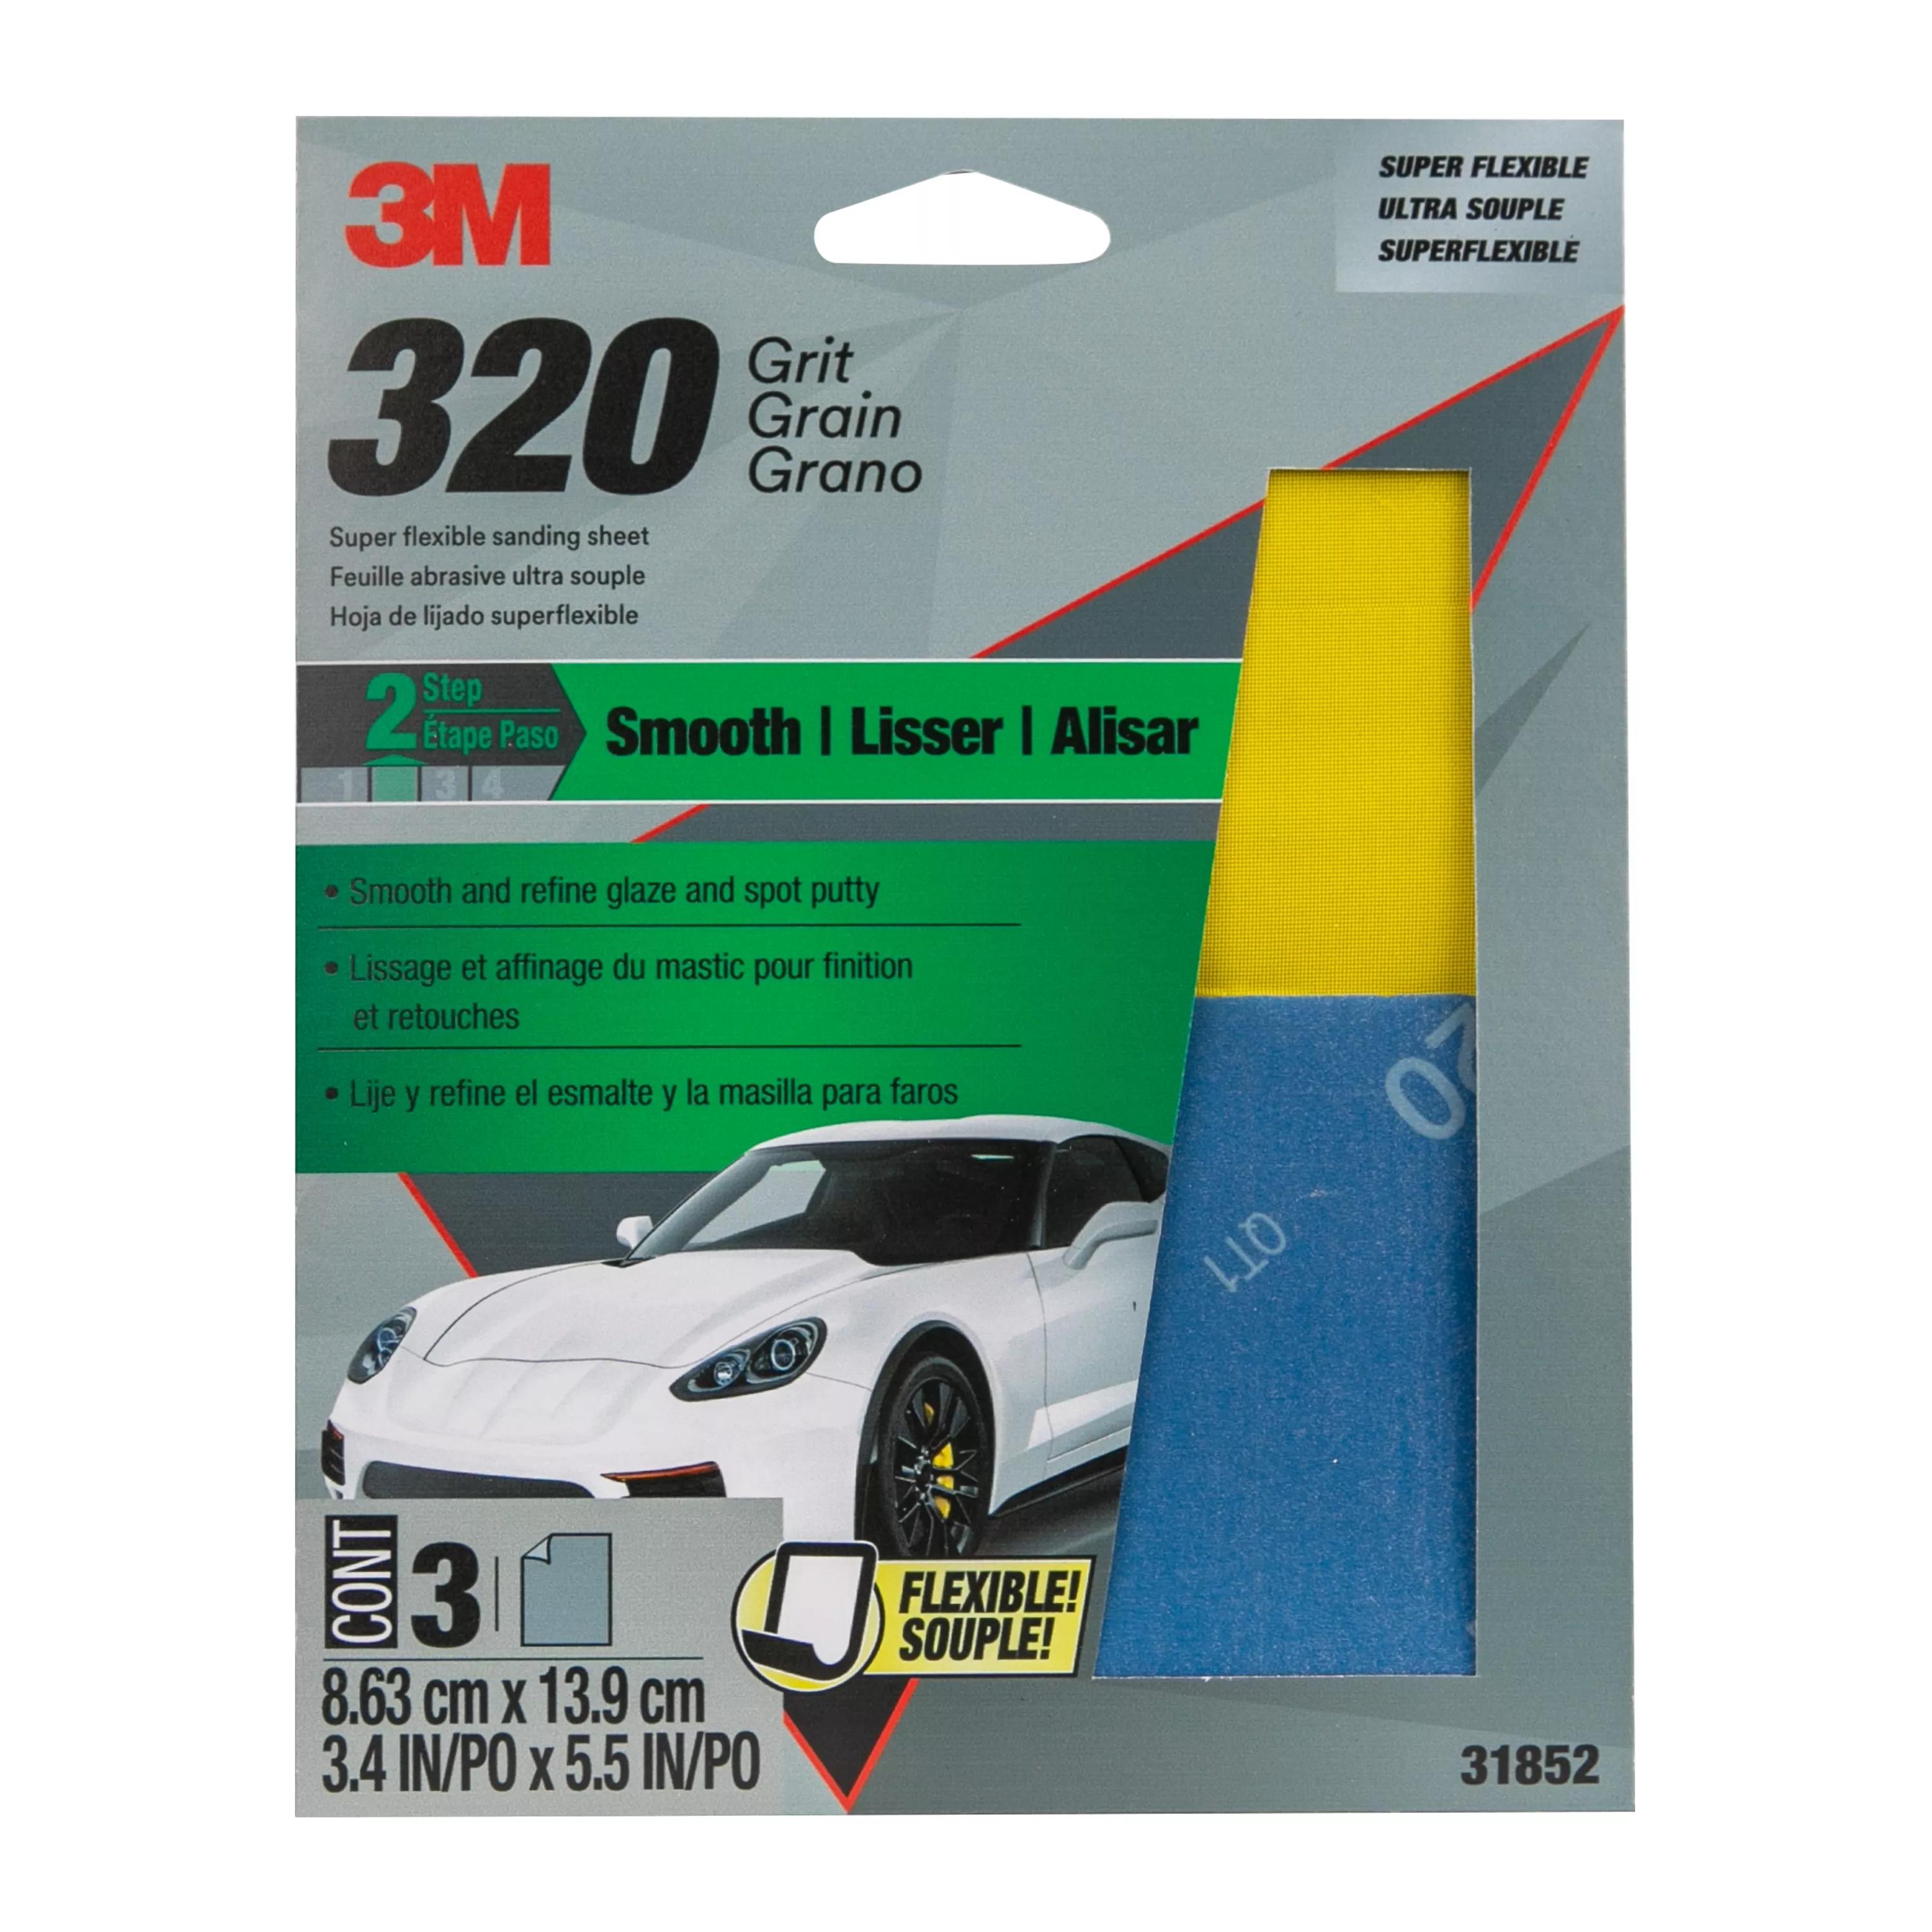 3M™ Super Flexible Sanding Sheets, 31852, 320 Grit, 3 pack, 20 packs per
case